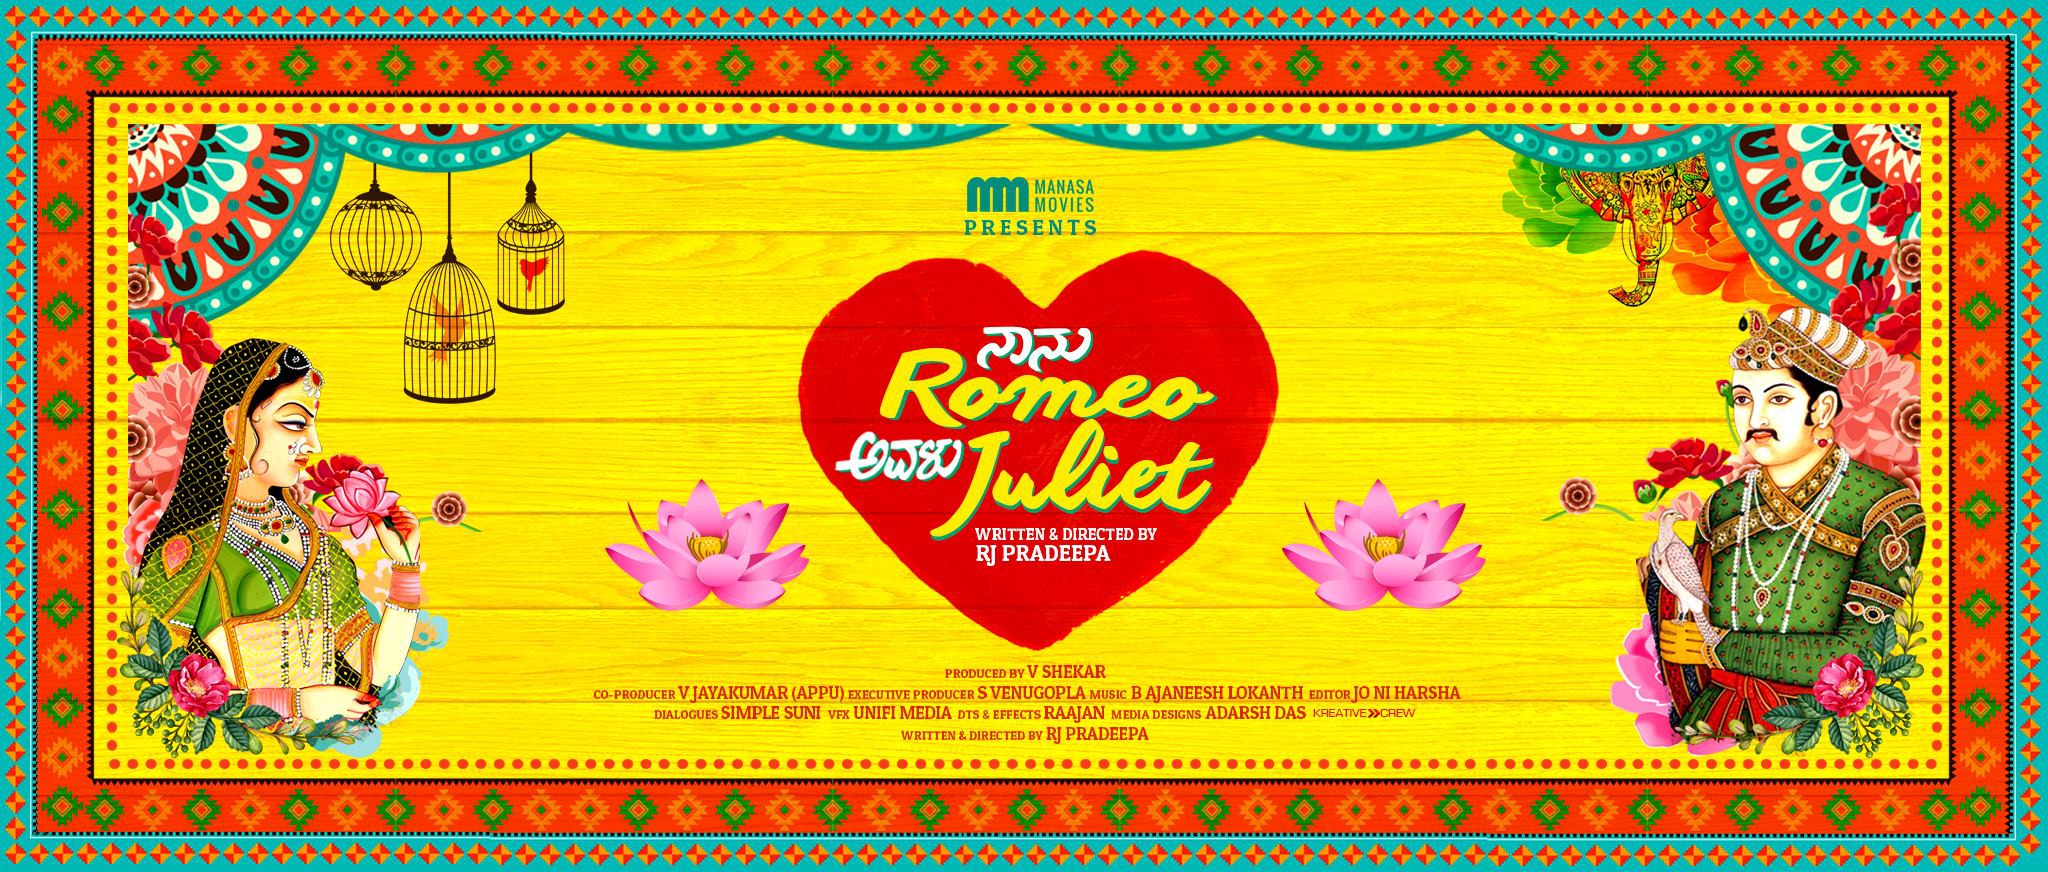 Mega Sized Movie Poster Image for Nanu Romeo Avalu Juliet 